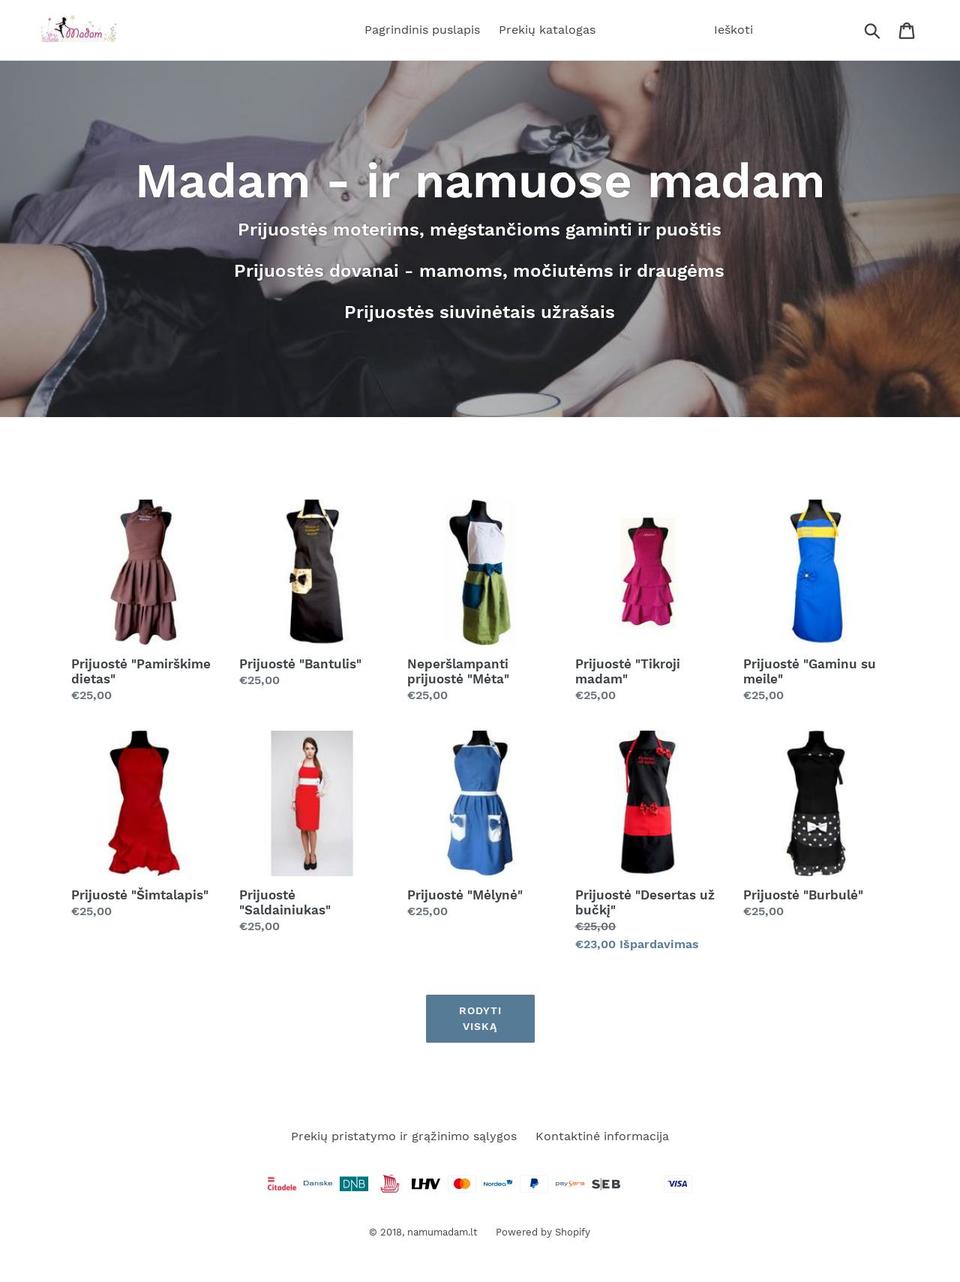 namumadam.lt shopify website screenshot